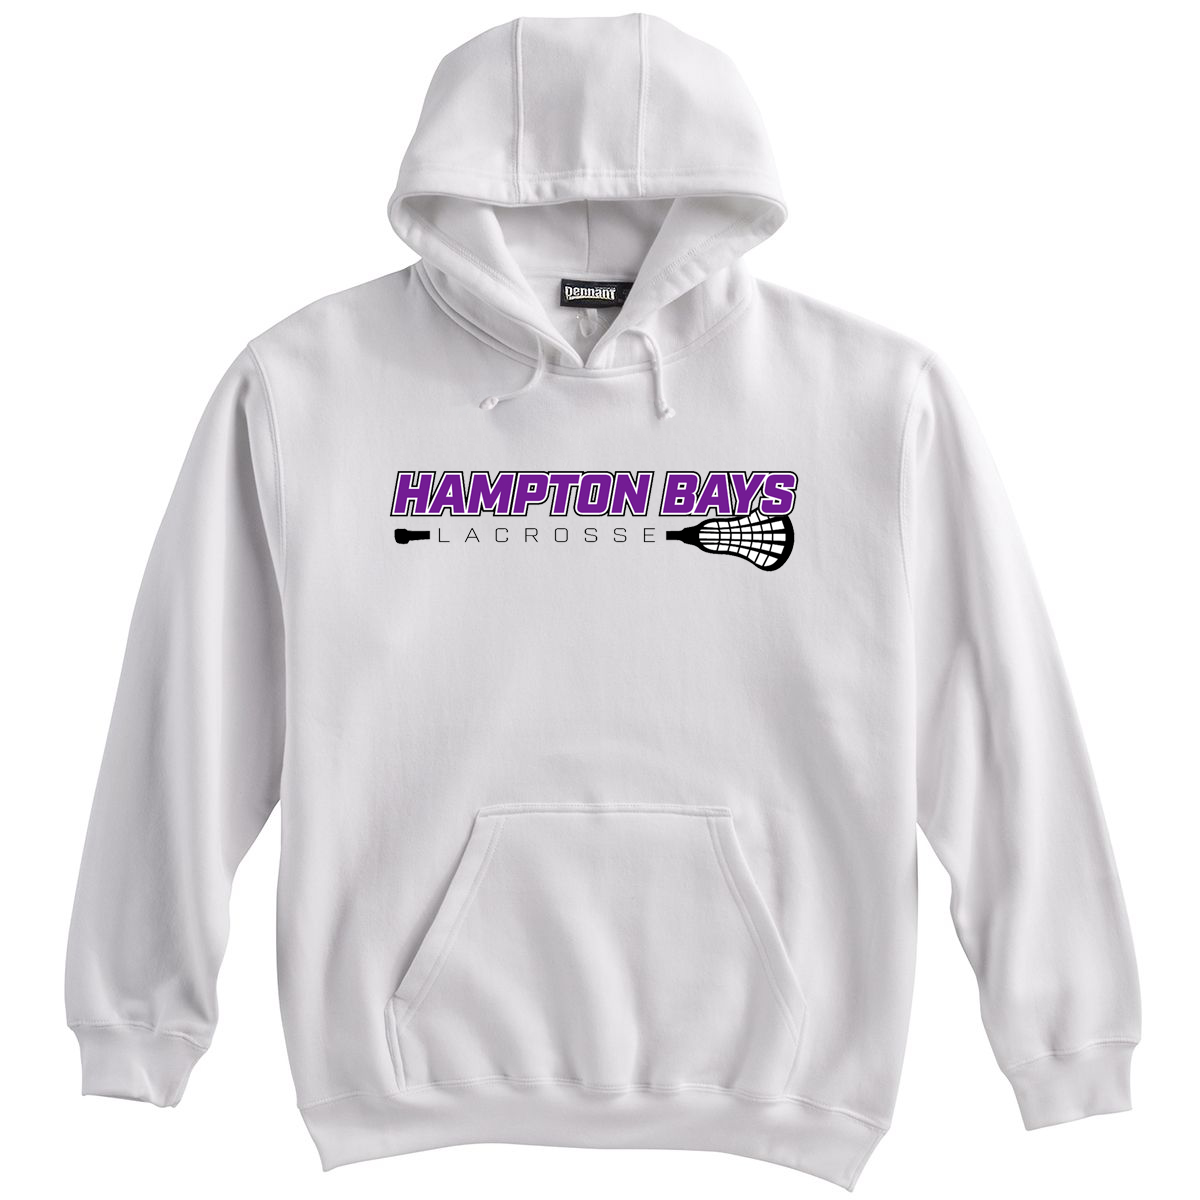 Hampton Bays Lacrosse Sweatshirt